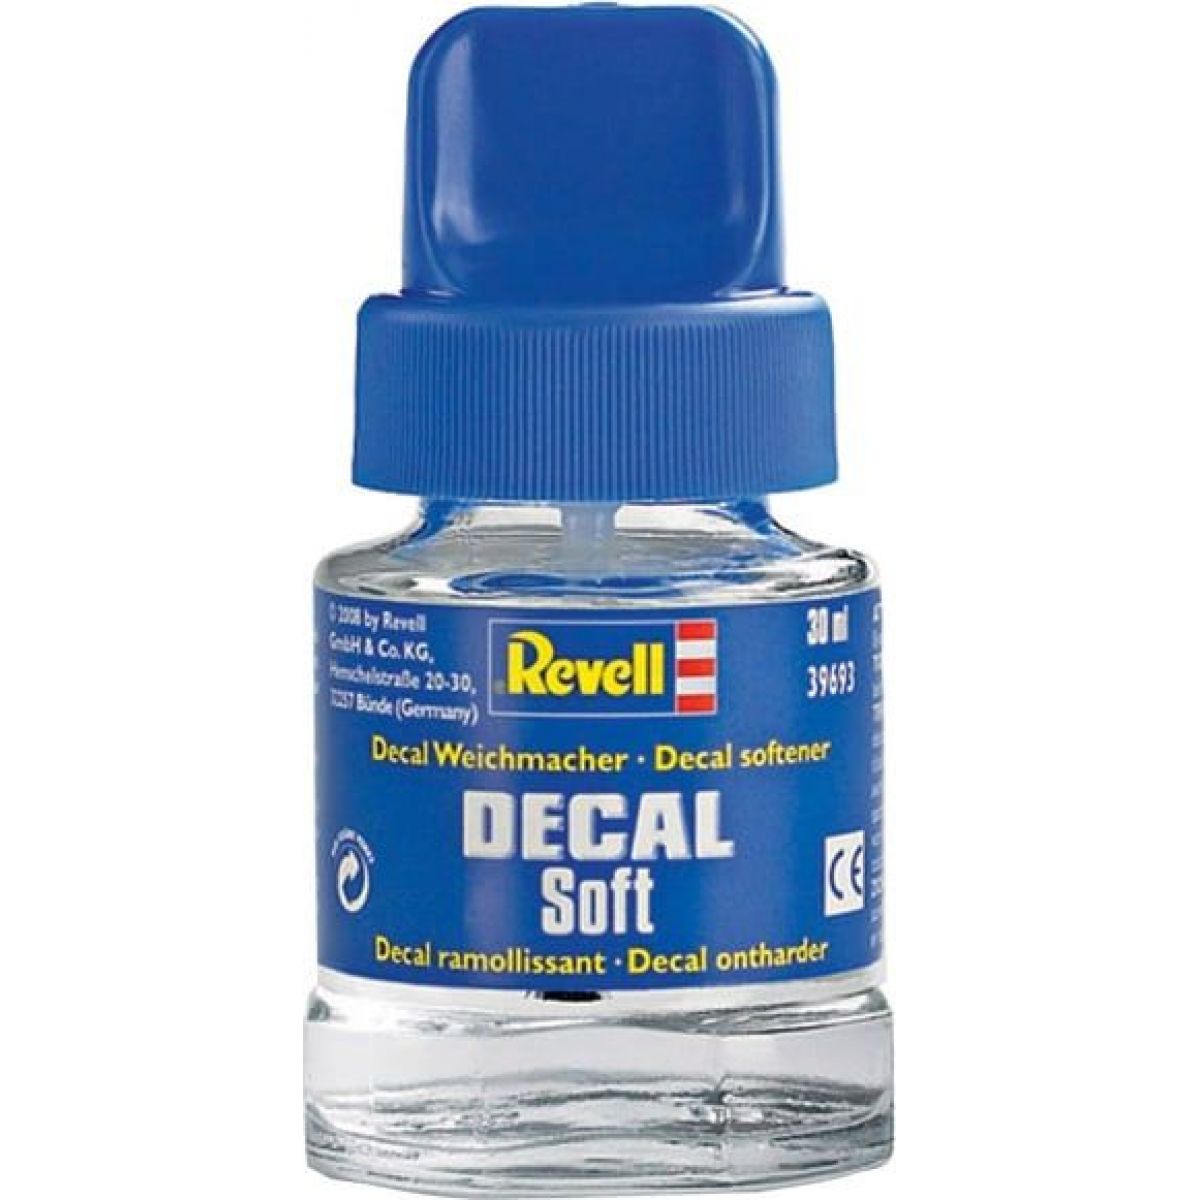 Decal Soft 39693 30ml